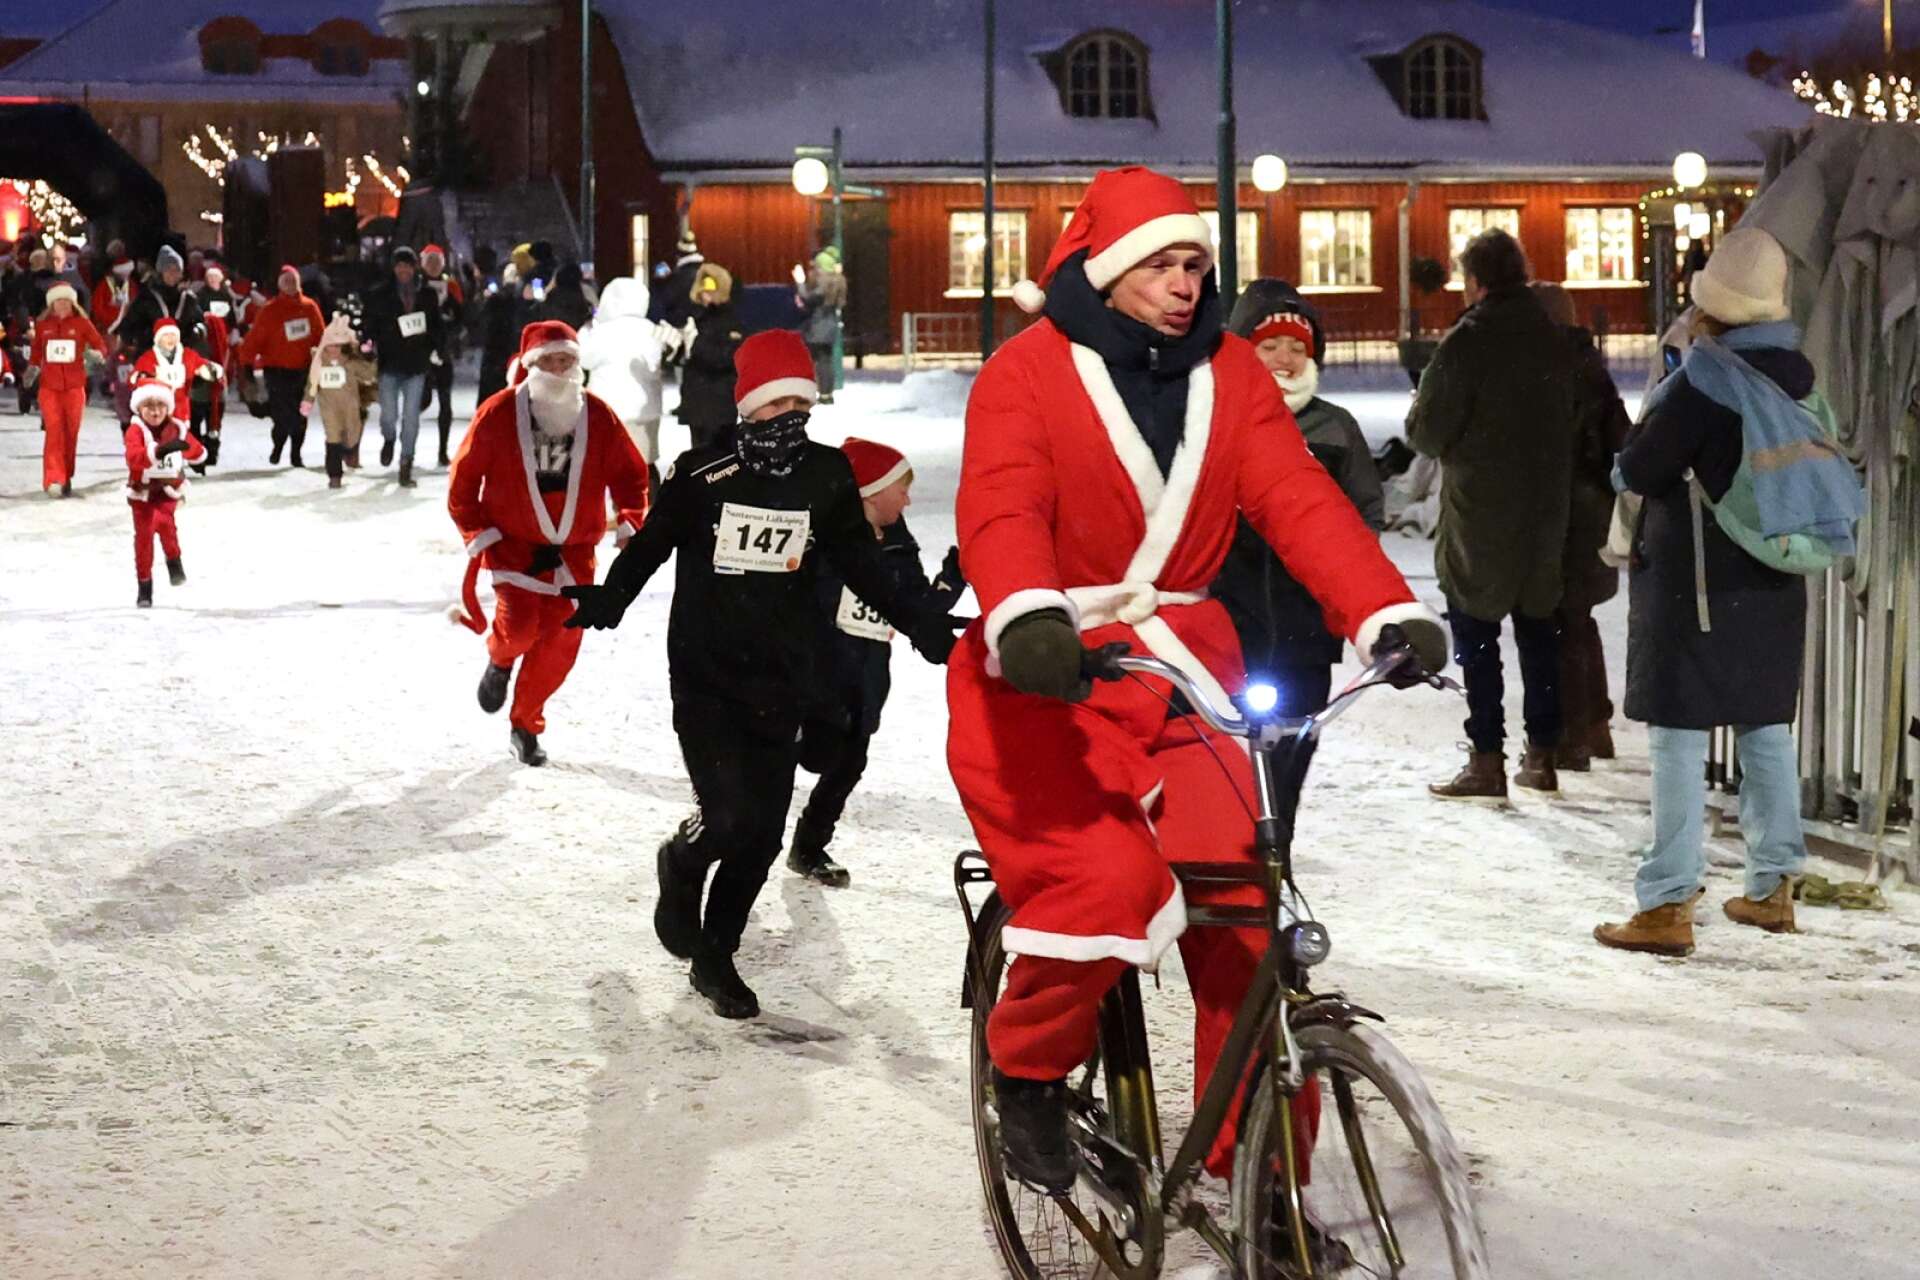 Loppet leddes av en cyklande jultomte. 